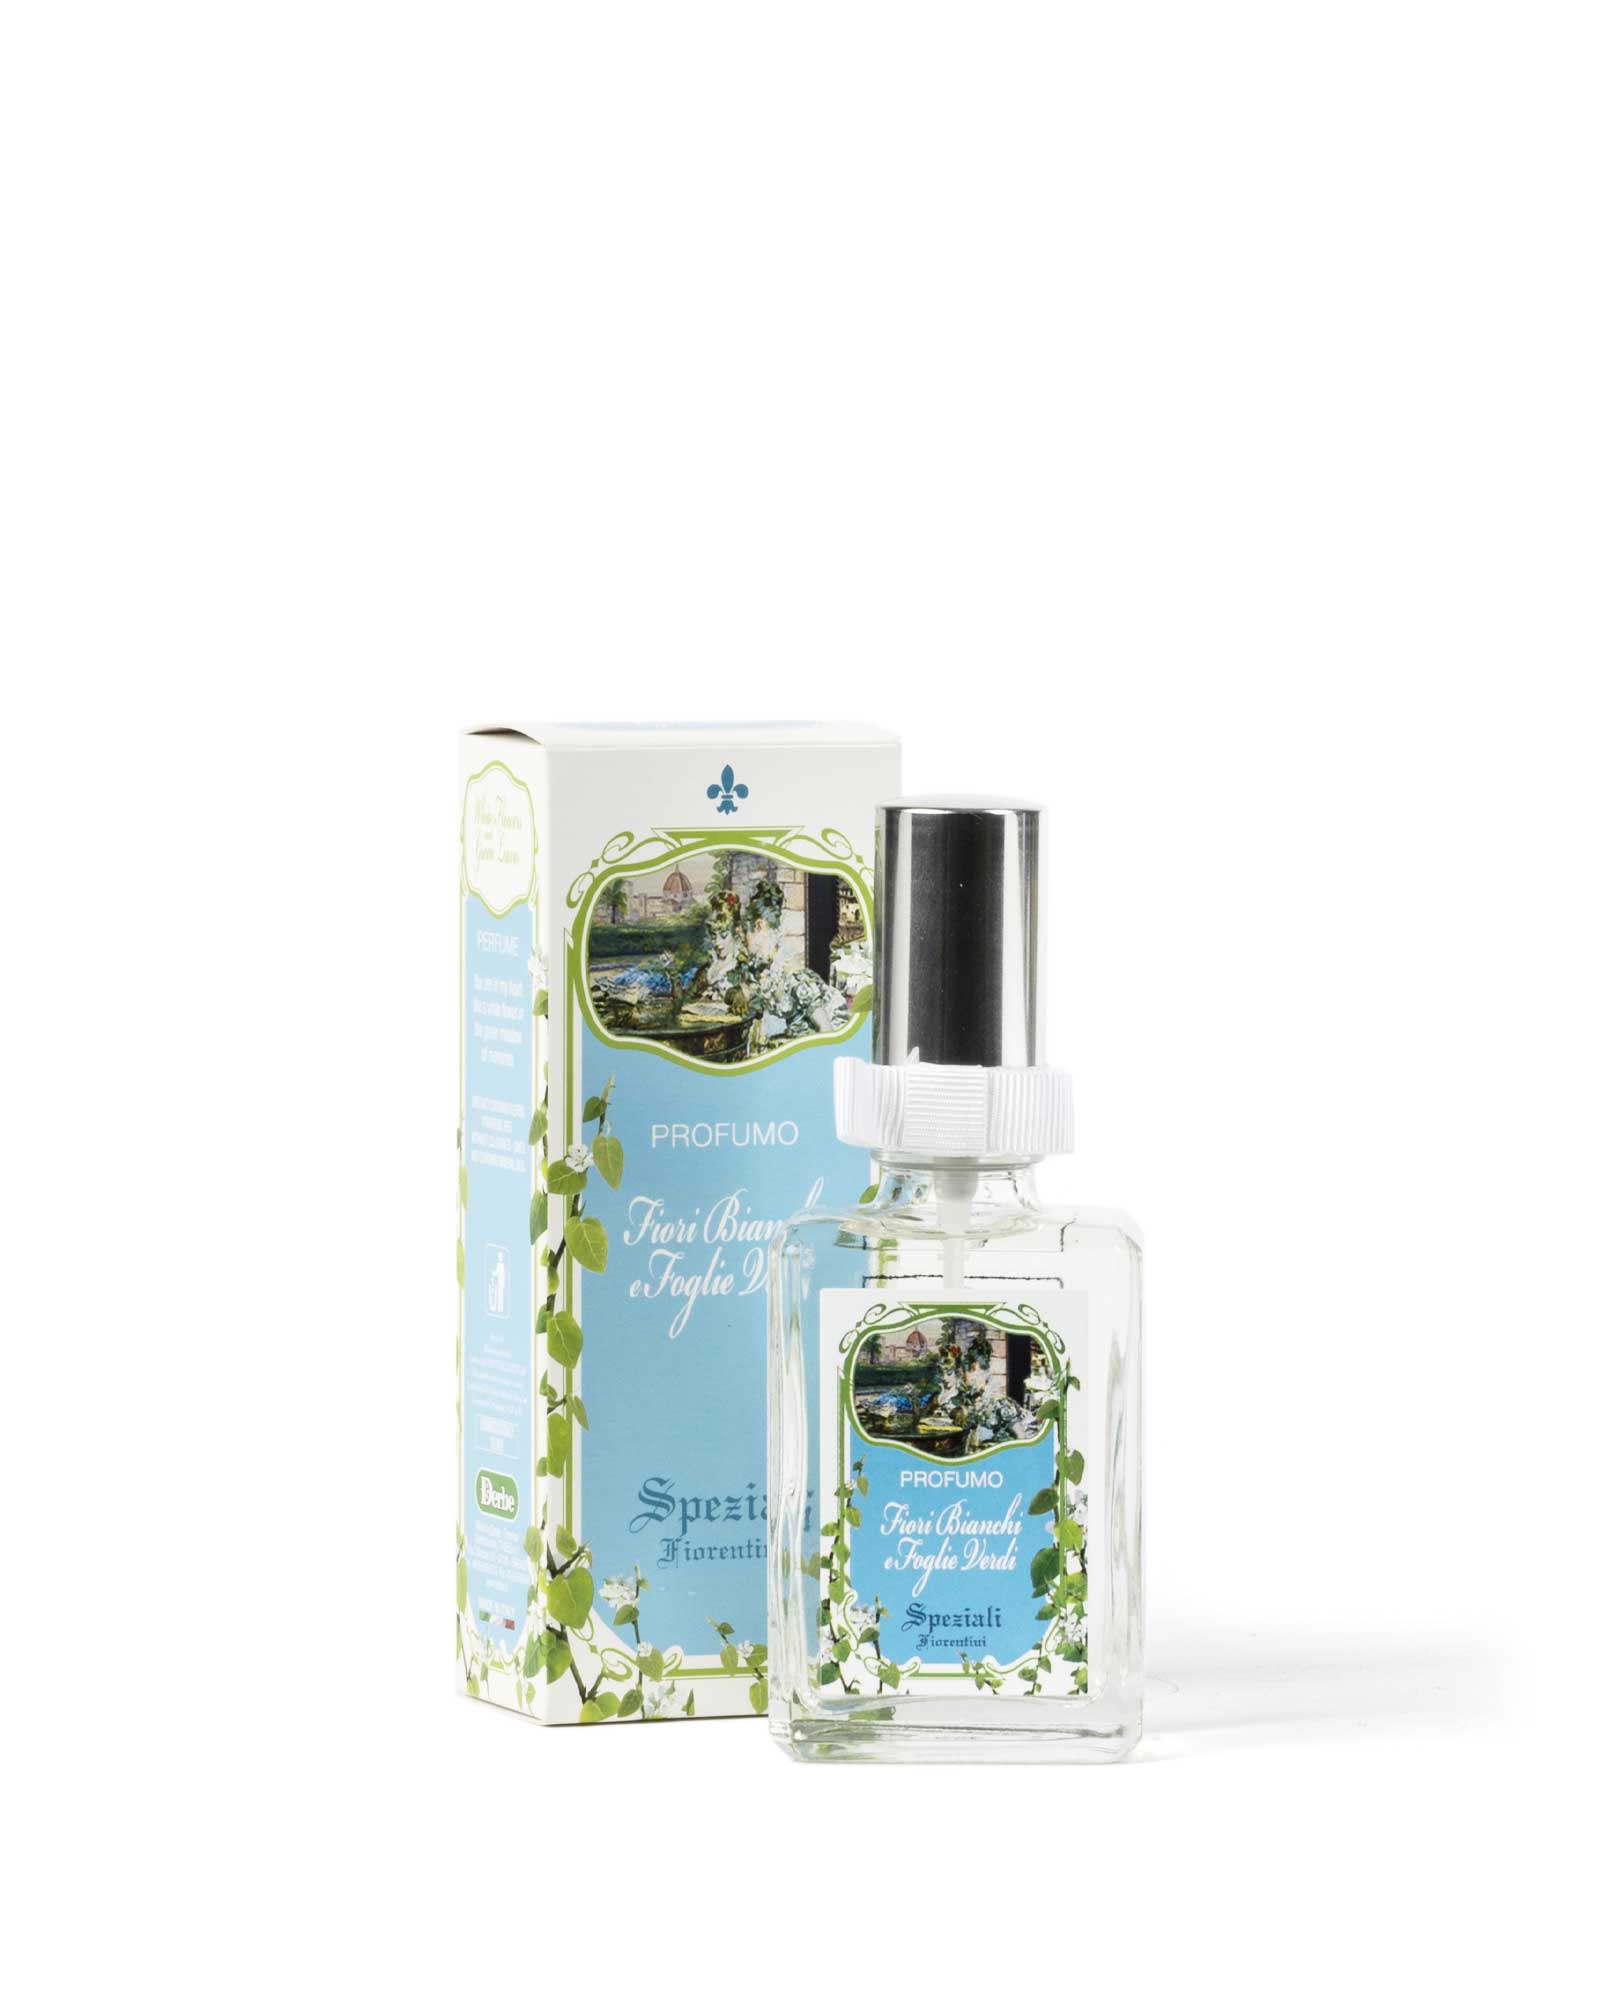 Perfume ivy and hawthorn – Speziali Fiorentini – Derbe